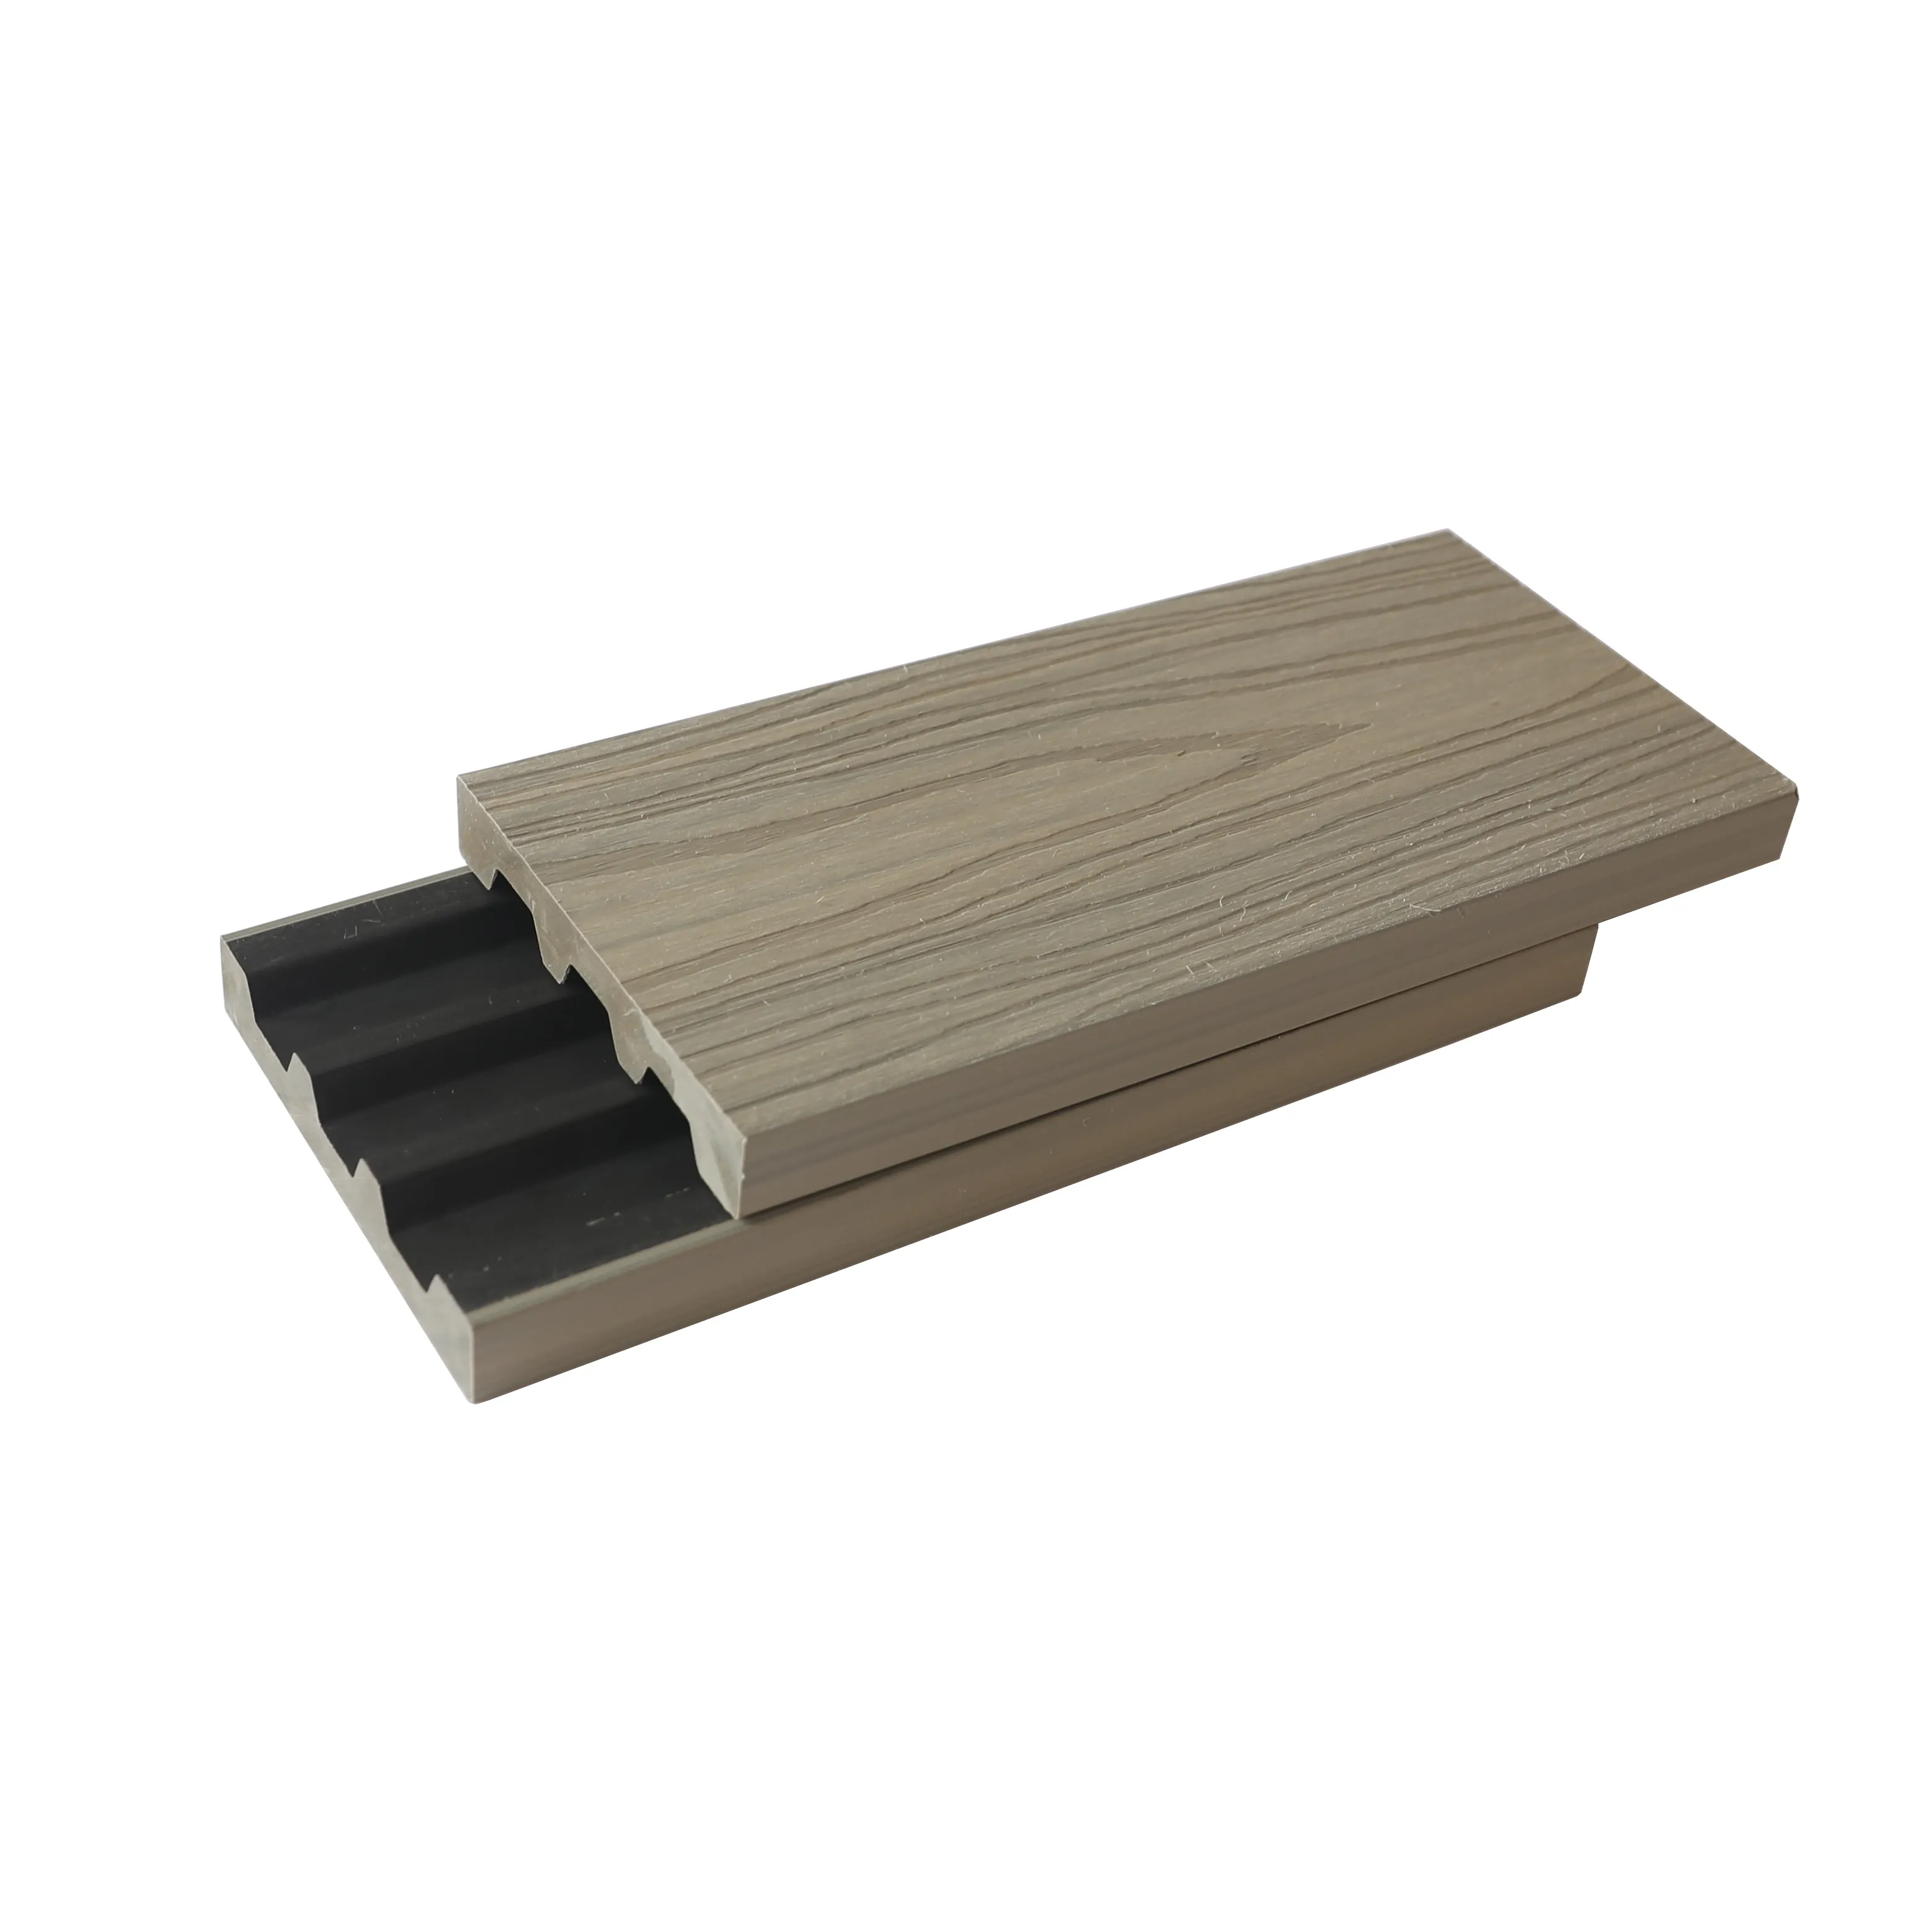 Pavimenti grigi eva teak decking progetto decking piscina pavimenti in teak materiale in legno wpc decking solido